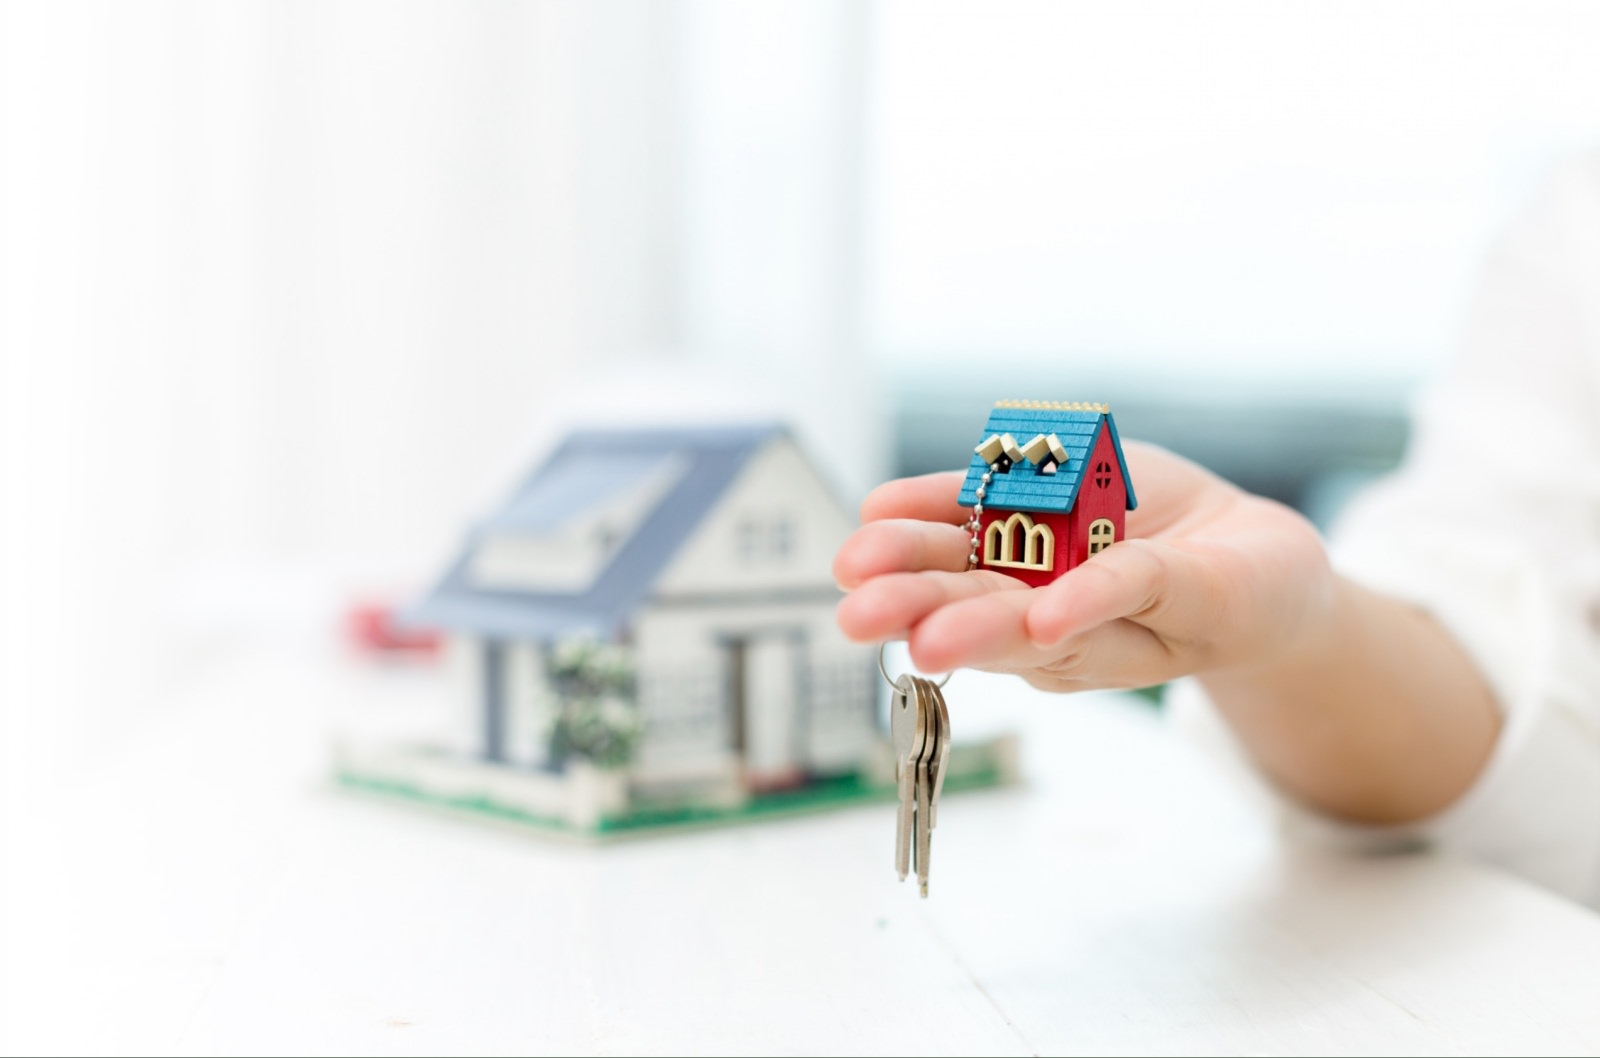 A hand holding a set of keys with a tiny house keychain